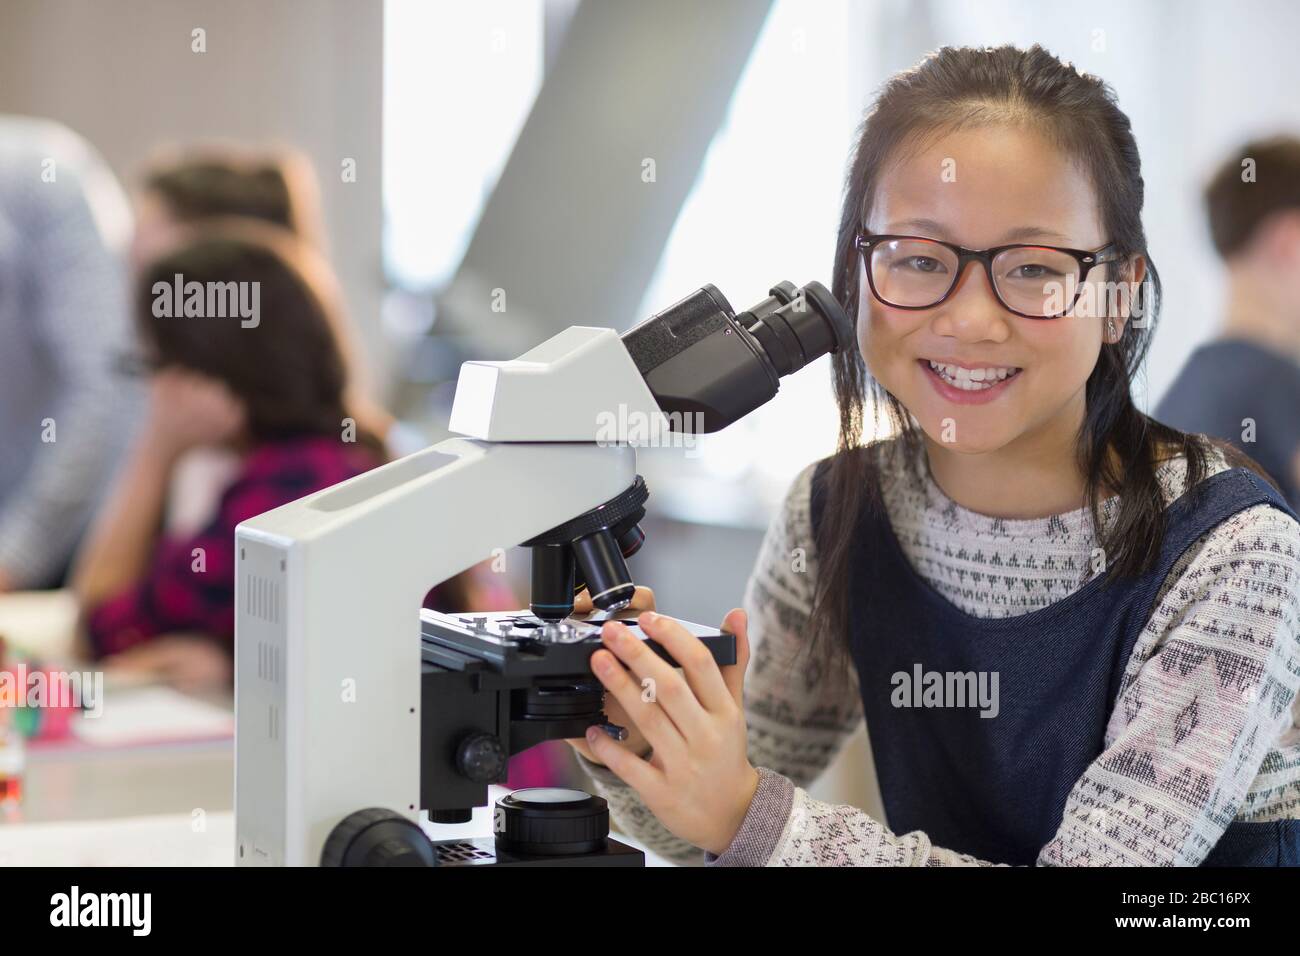 Portrait smiling, confident girl student using microscope, conducting scientific experiment in laboratory classroom Stock Photo